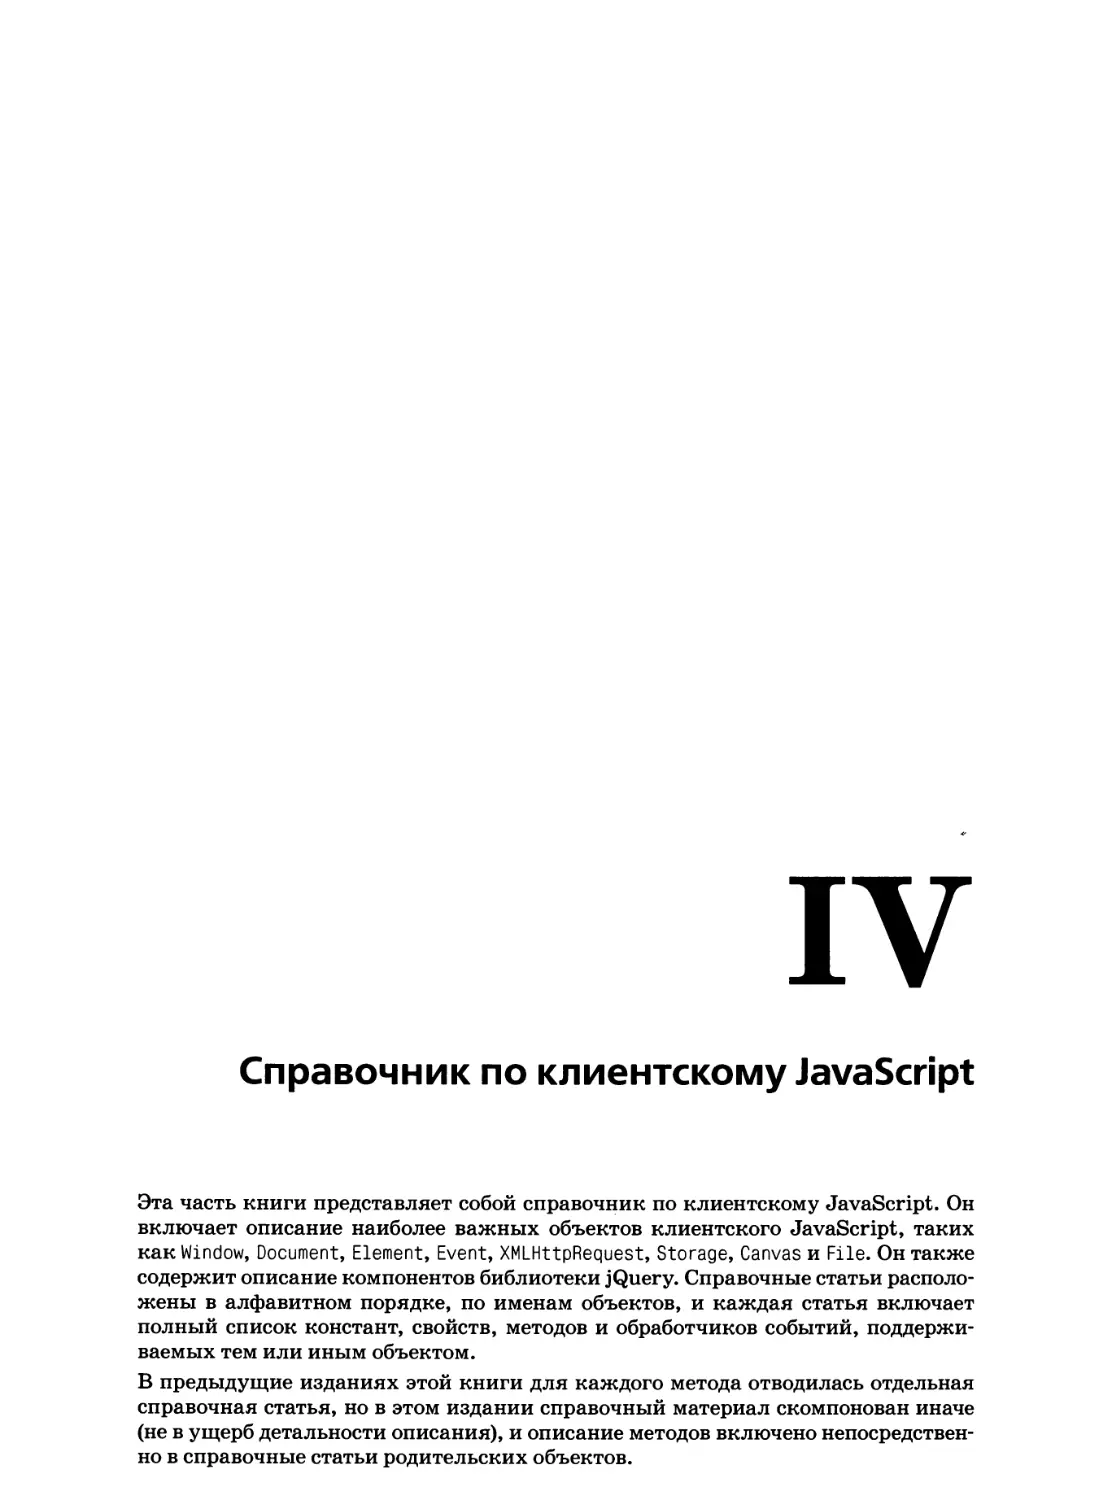 IV. Справочник по клиентскому JavaScript